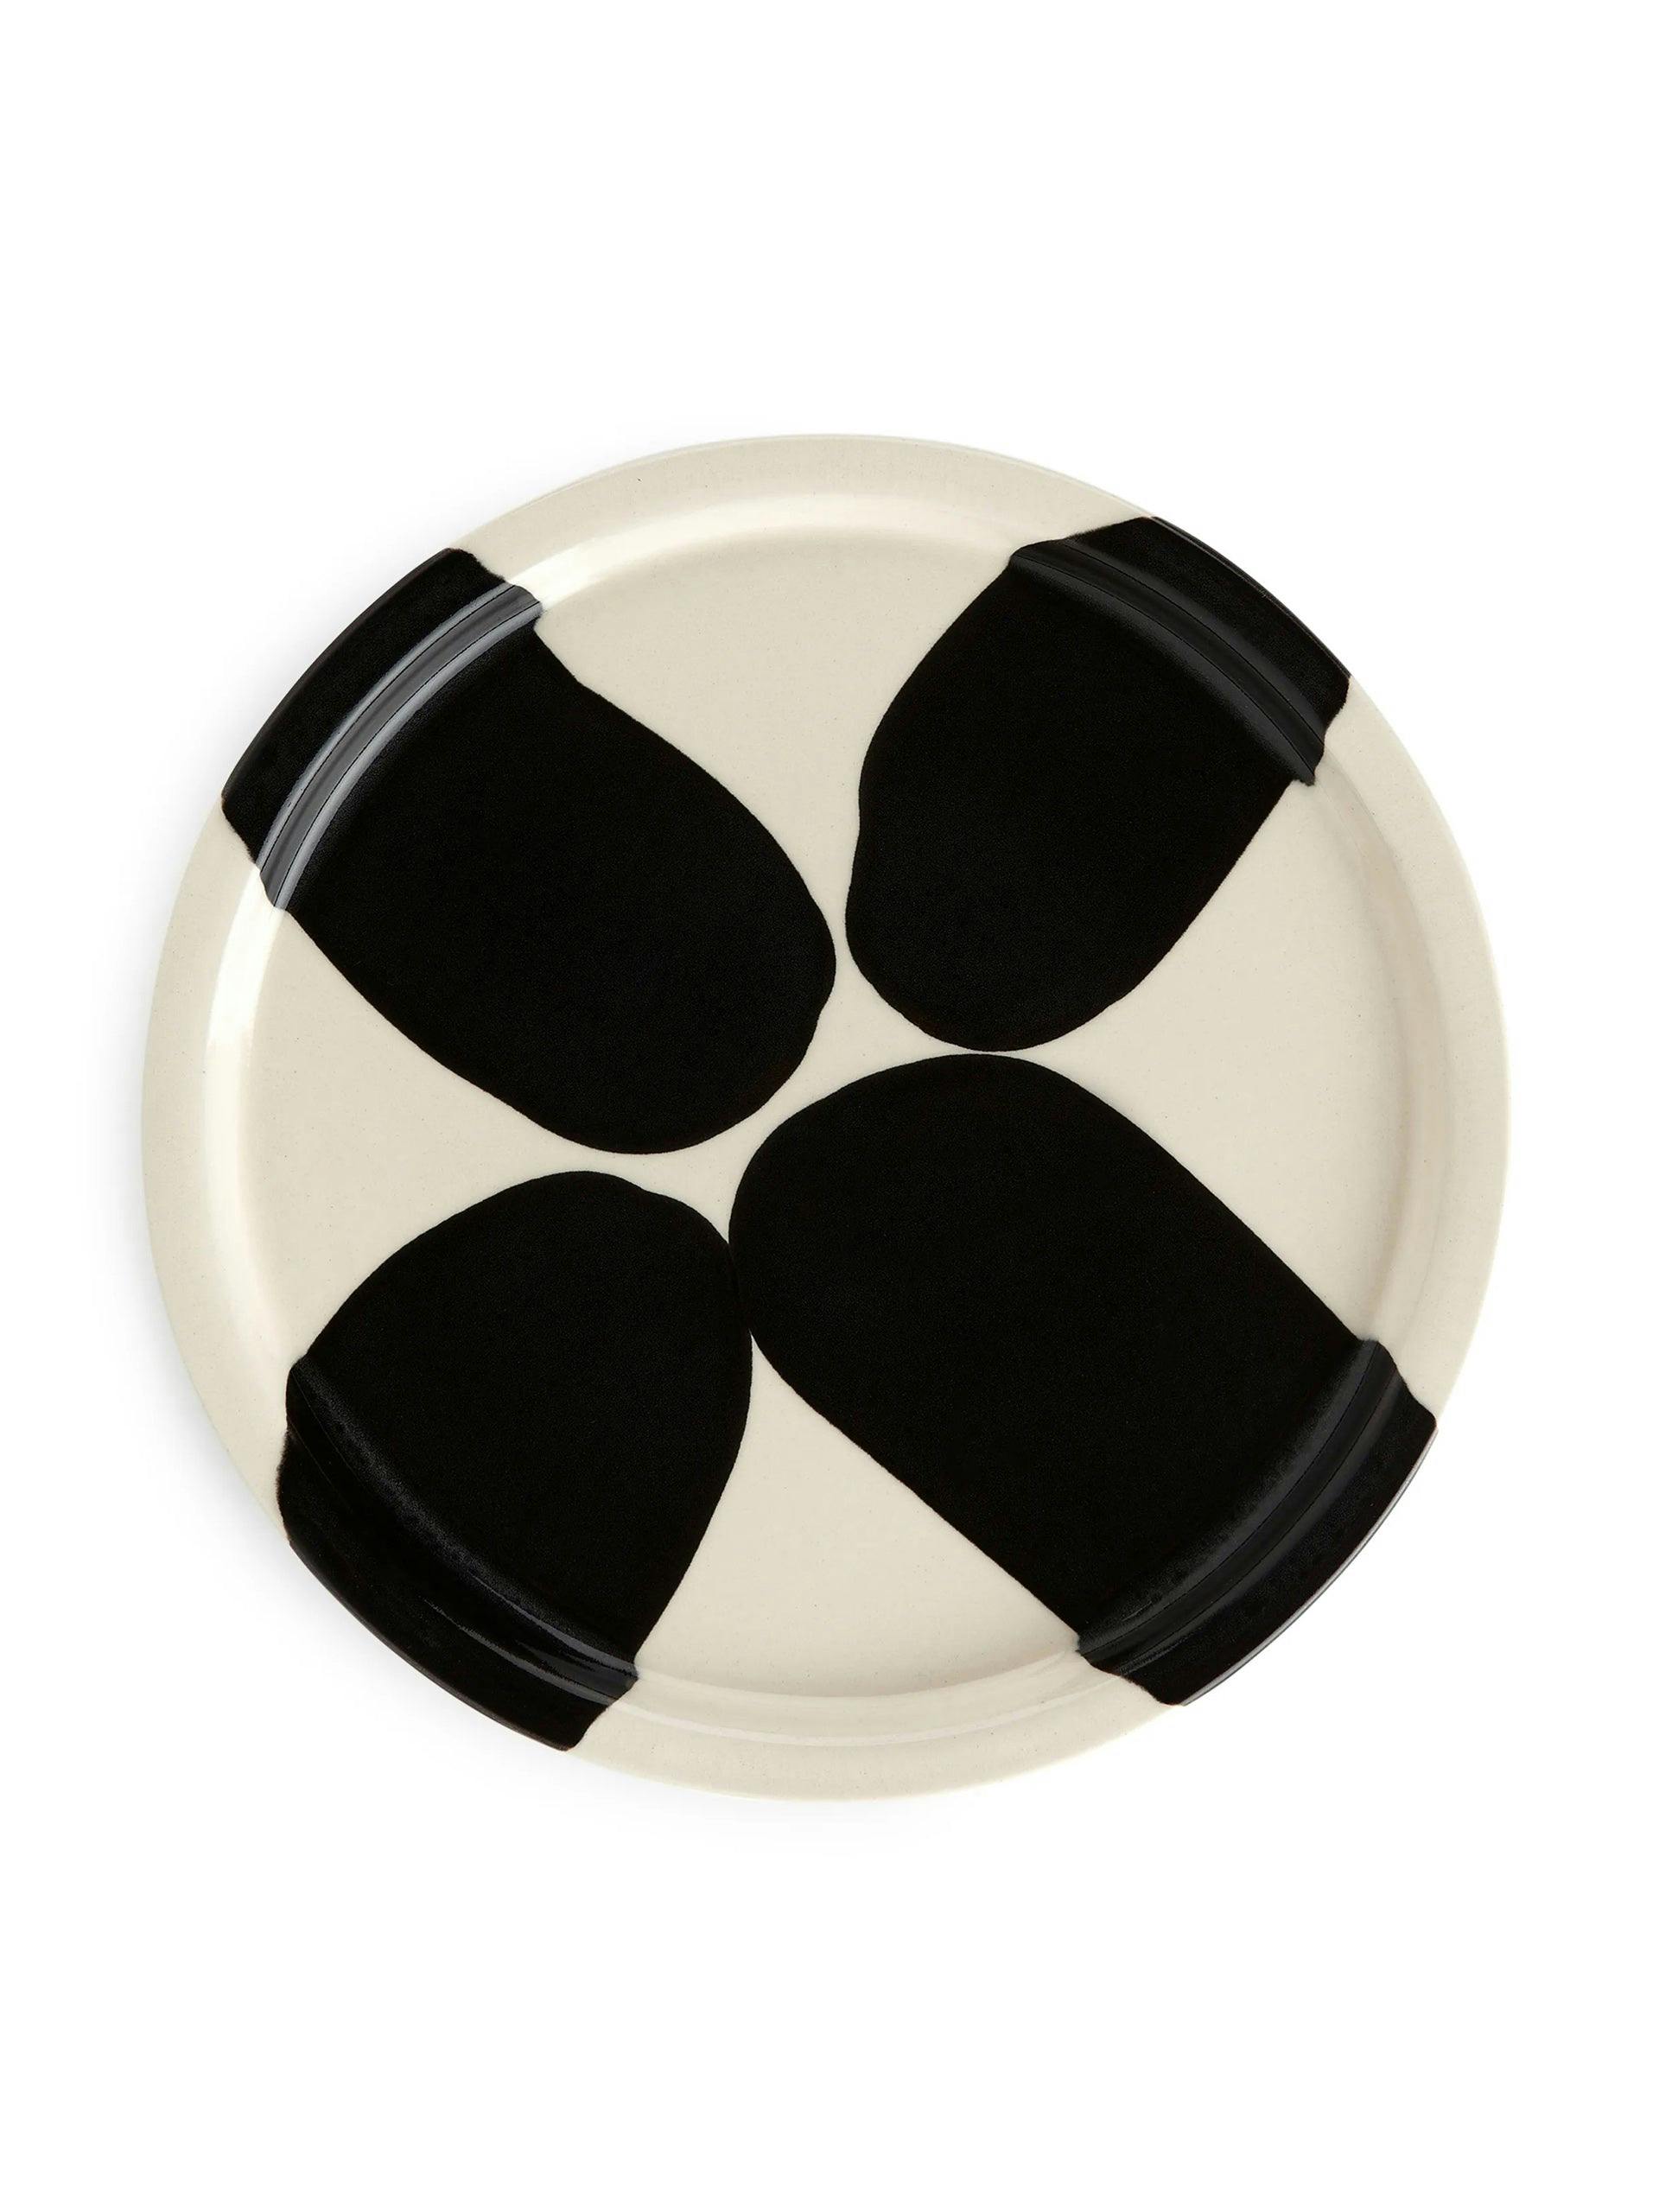 Stoneware plate